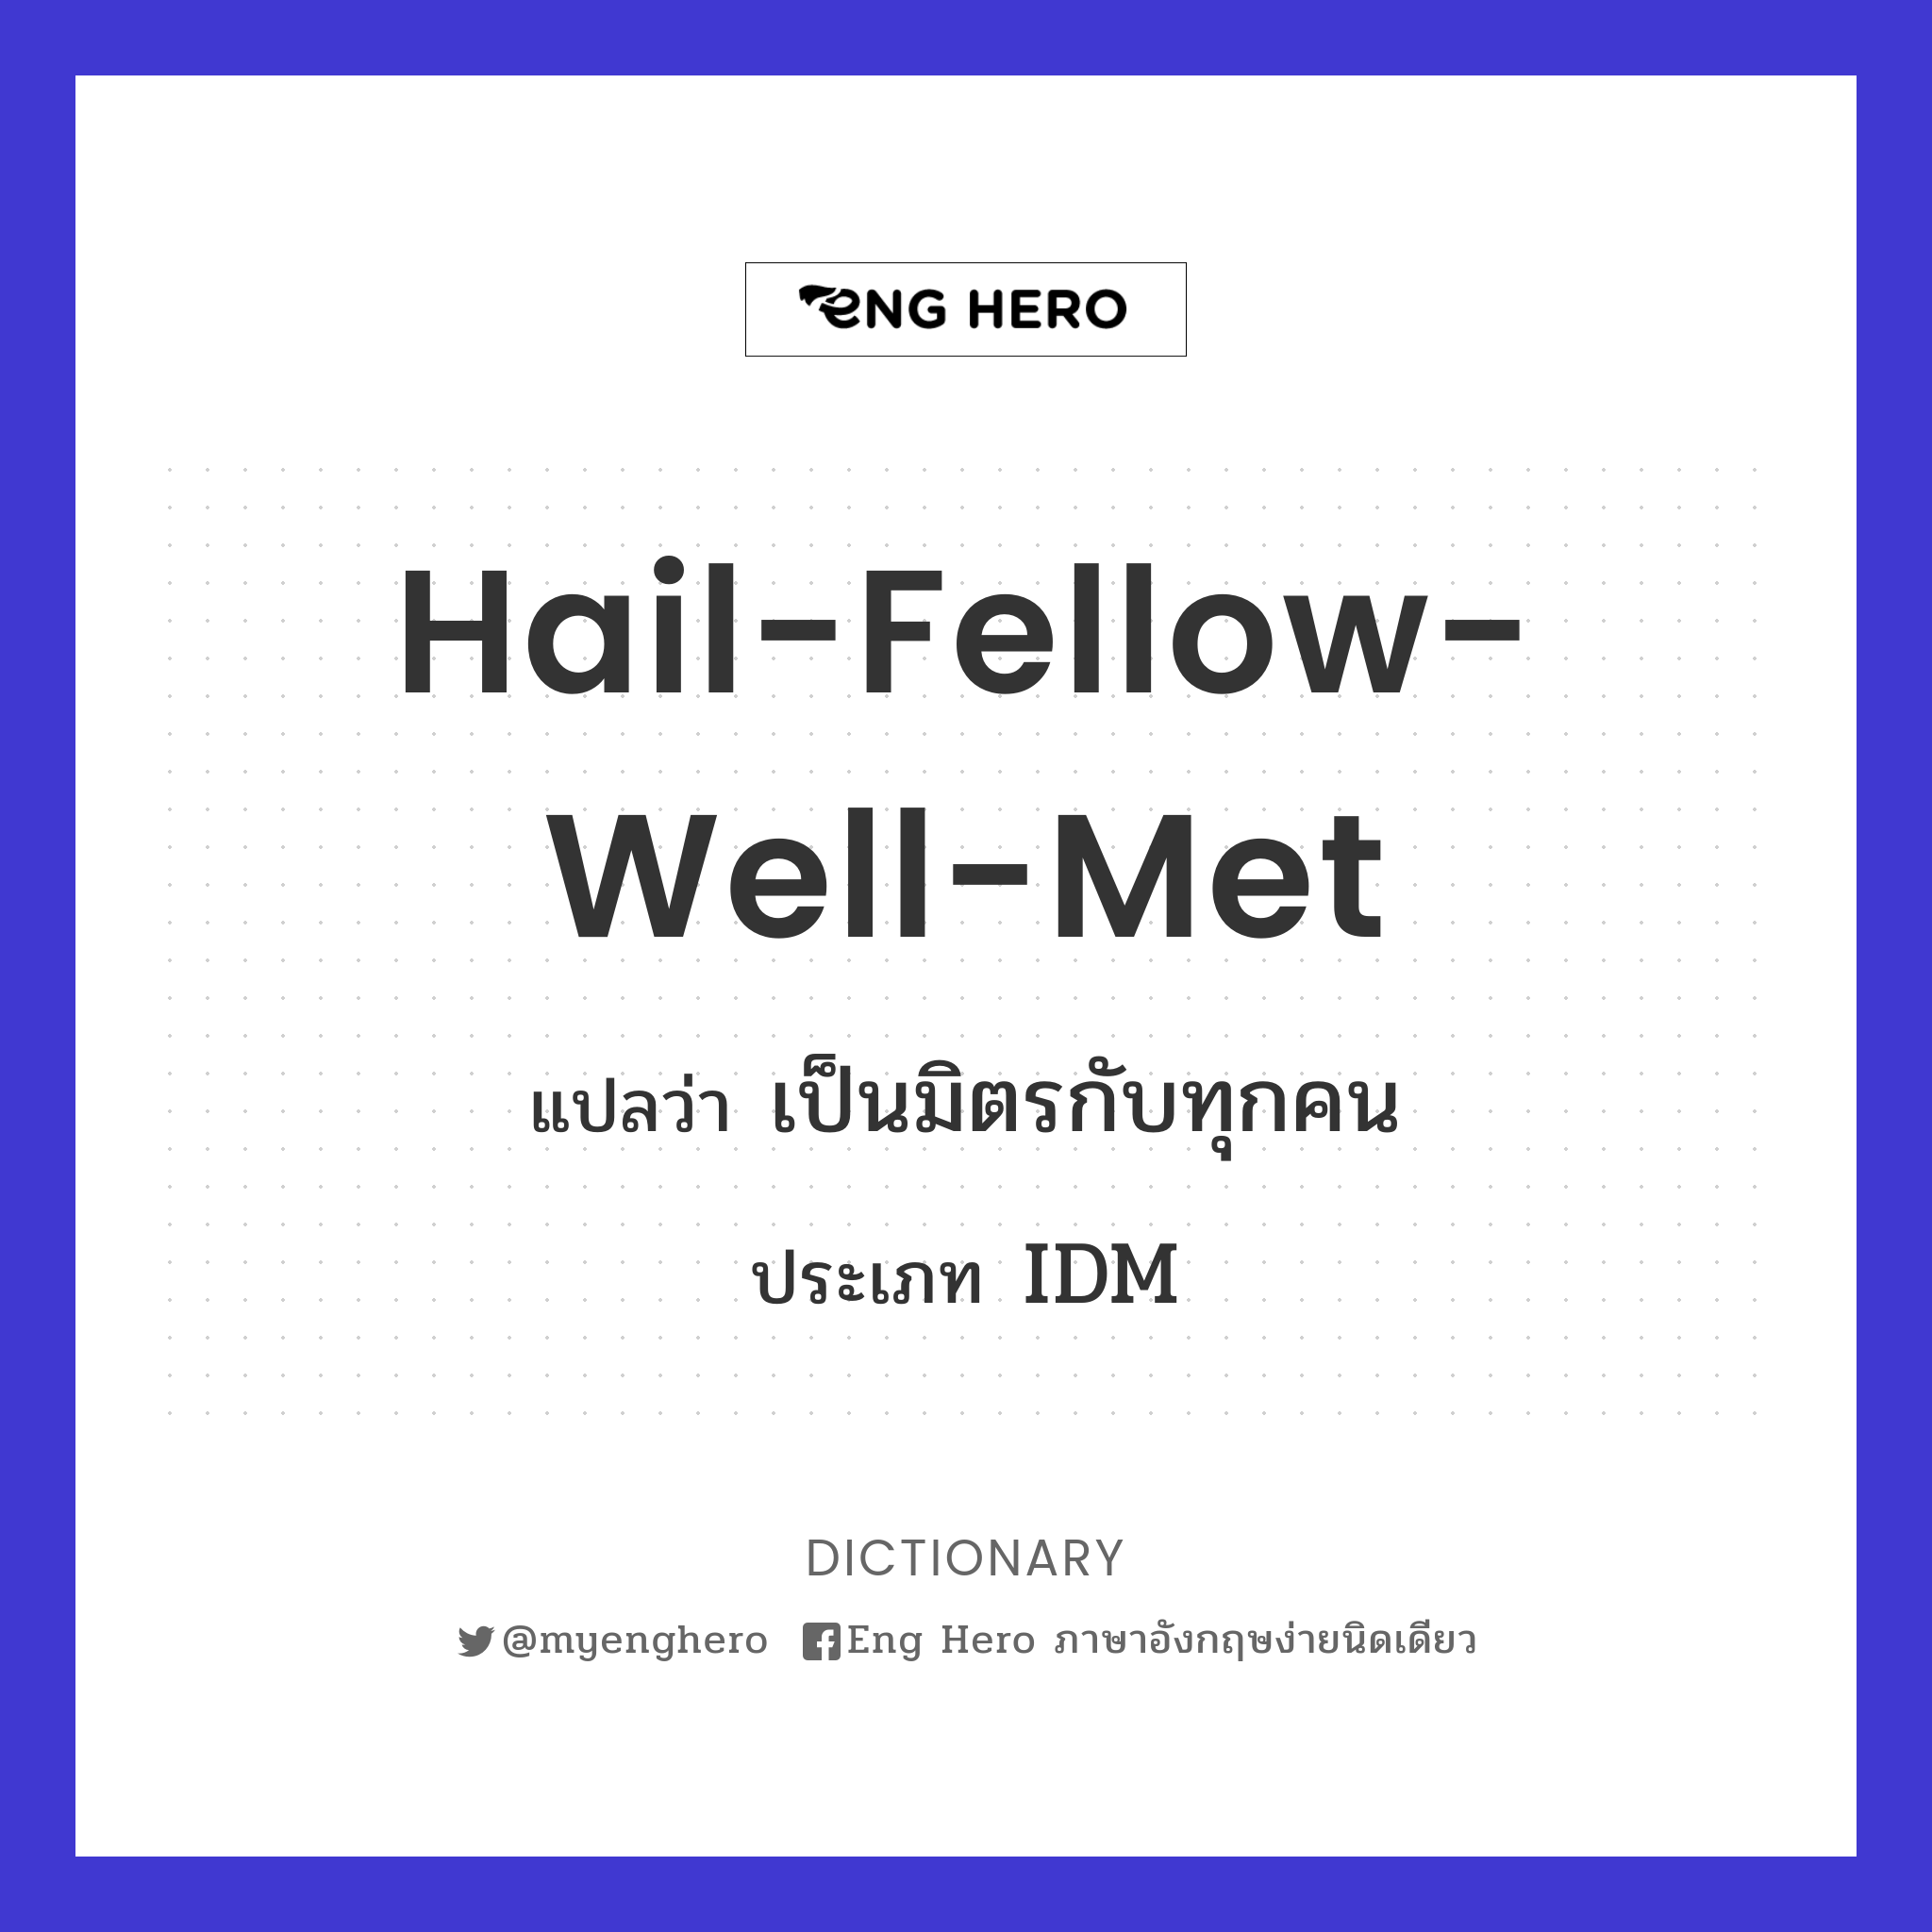 hail-fellow-well-met